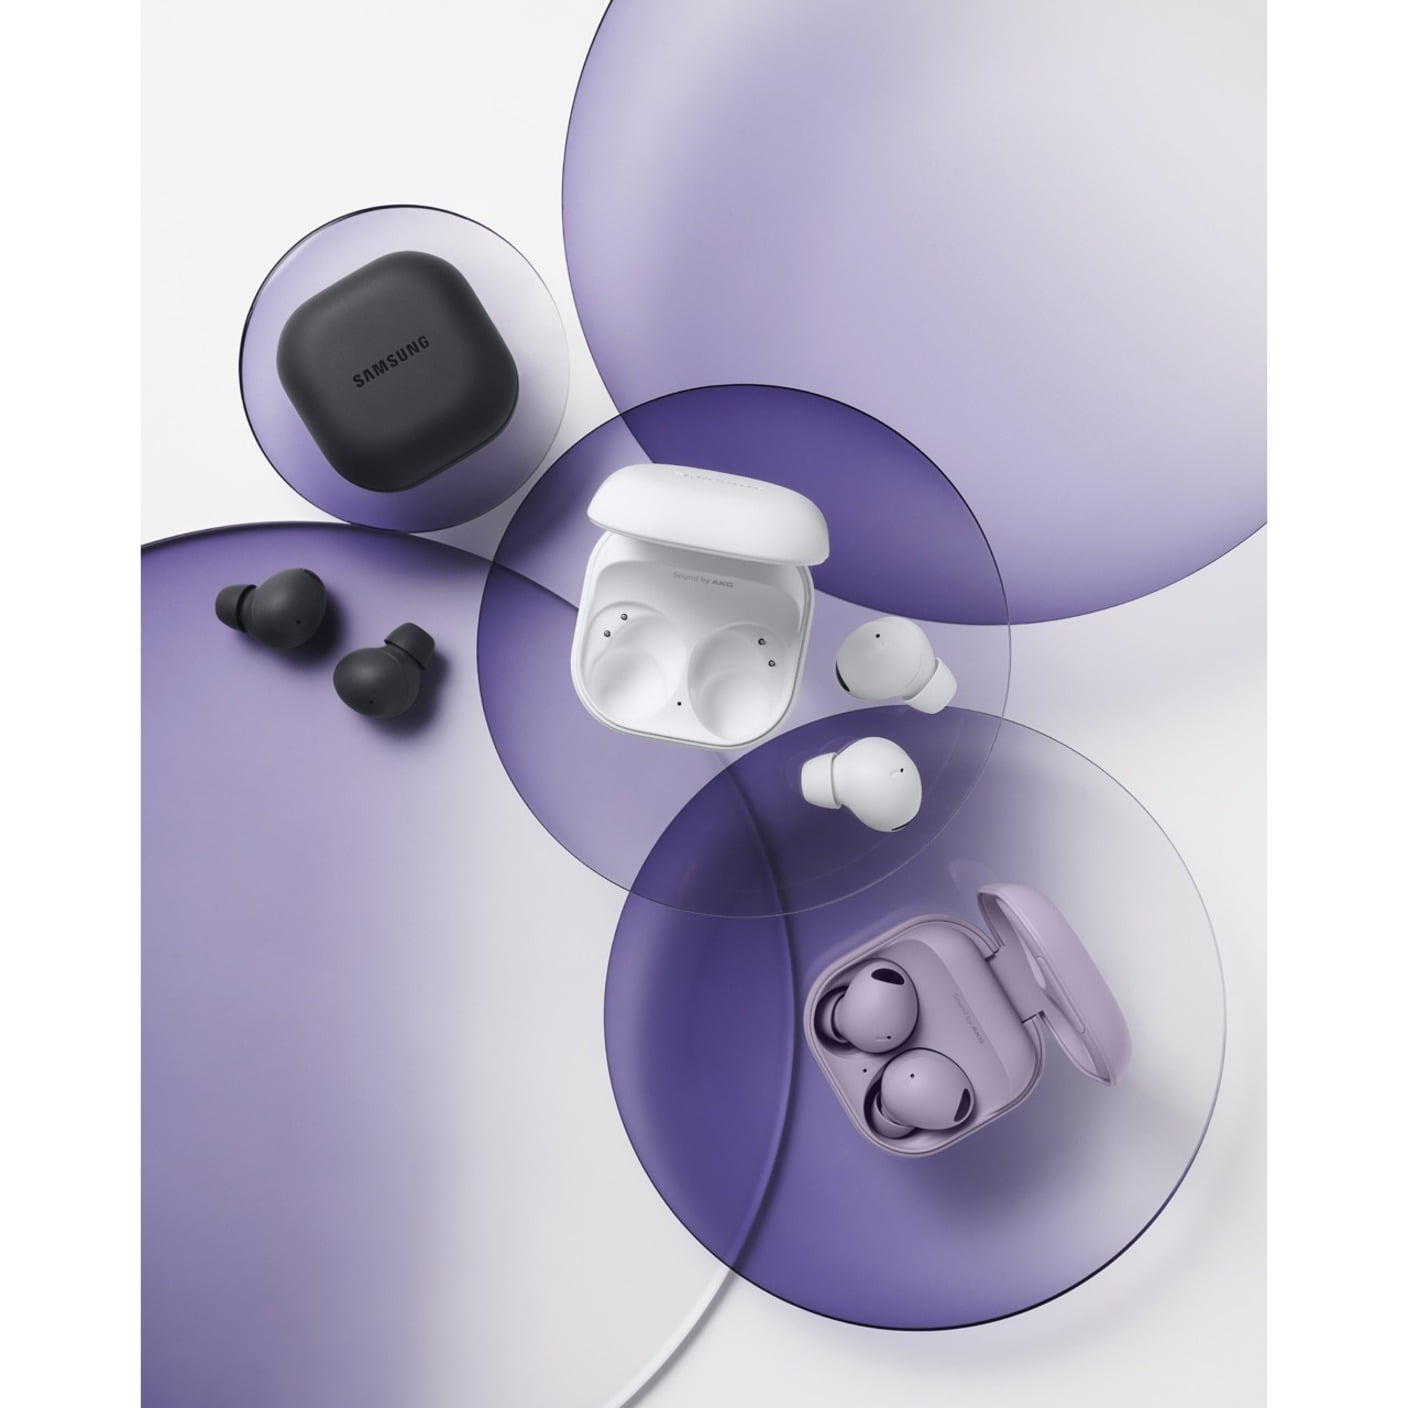 Noise - - - Samsung Stereo - White Buds2 - - White Pro, Binaural - In-ear Galaxy Canceling - Earbud Bluetooth Wireless True